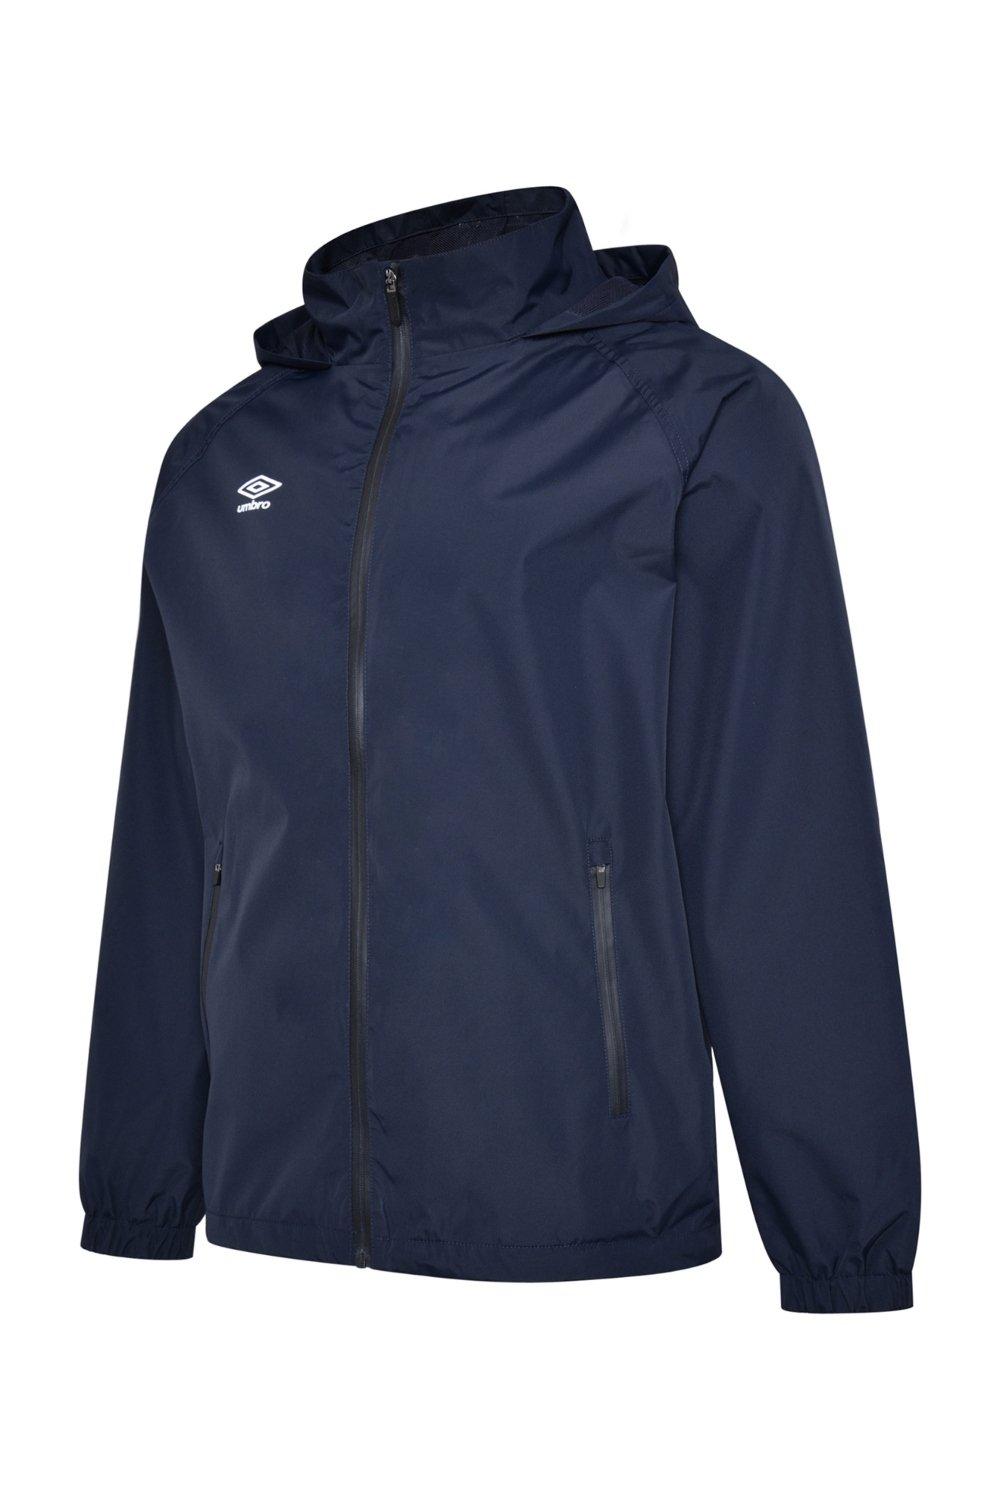 Jackets & Coats | Club Essential Waterproof Jacket | Umbro